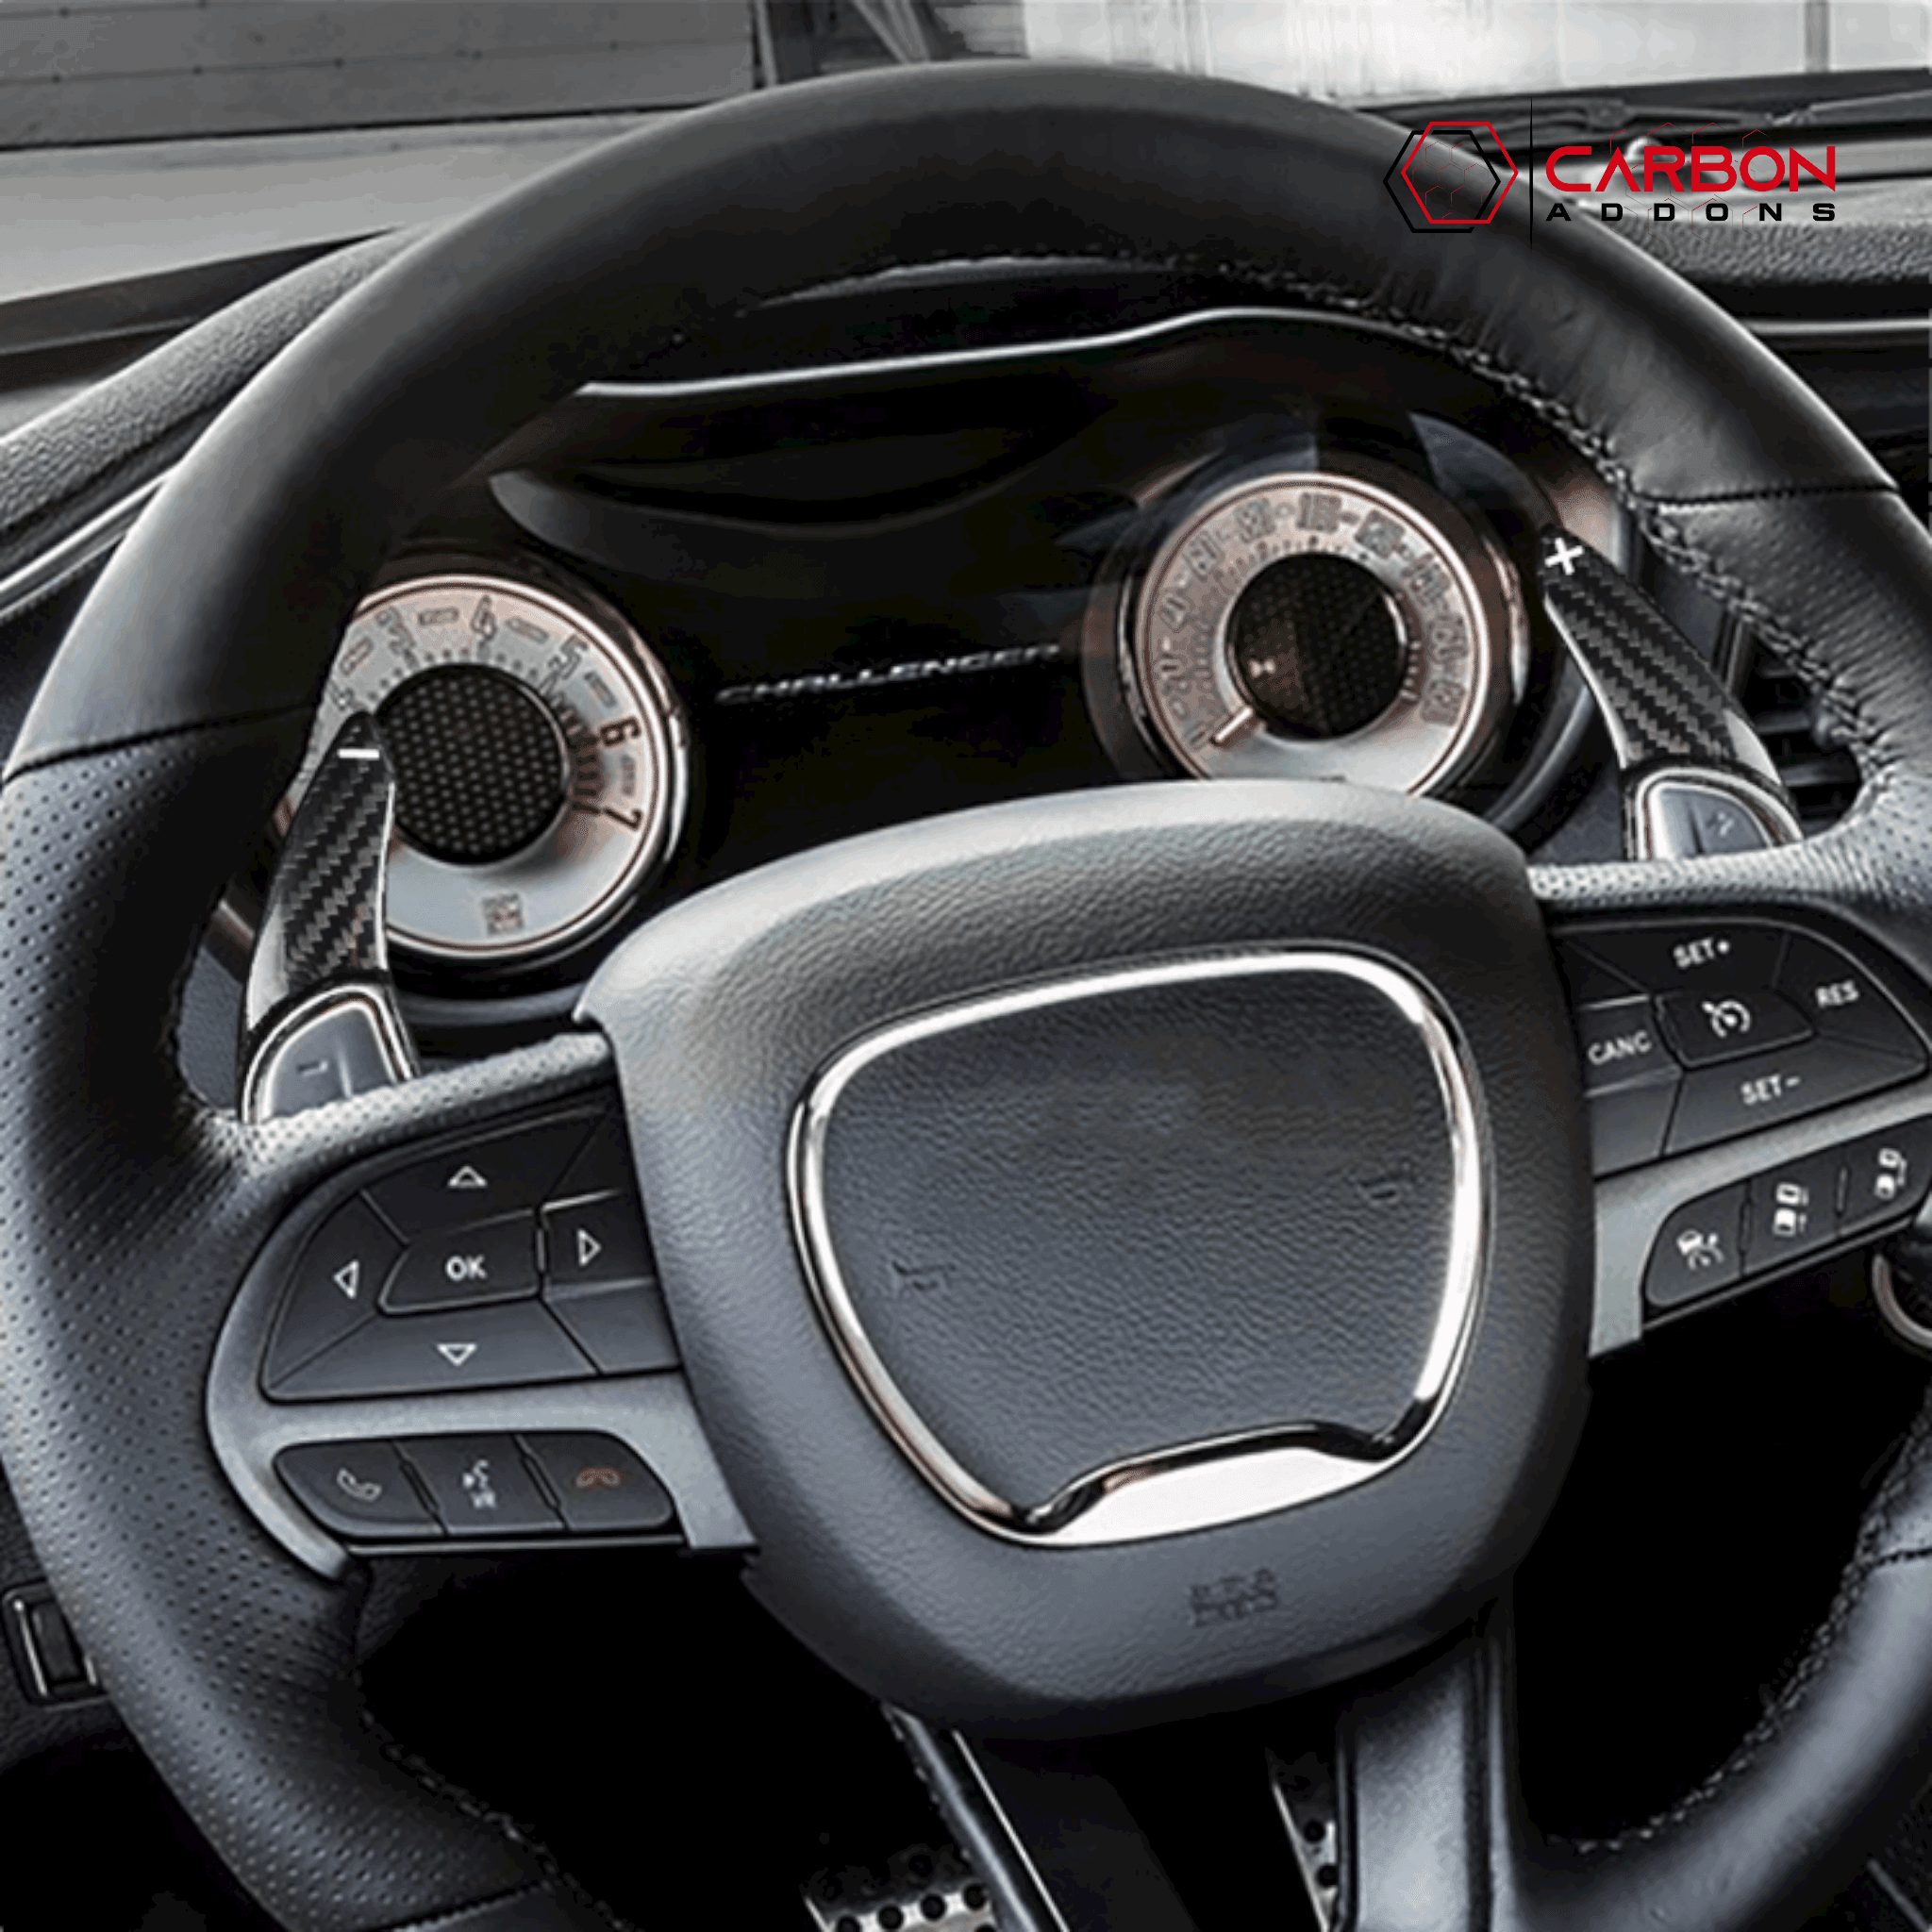 Carbon Fiber Paddle Shifter Extensions for Dodge Charger Challenger | Chrysler 300 | Jeep - carbonaddons Carbon Fiber Parts, Accessories, Upgrades, Mods